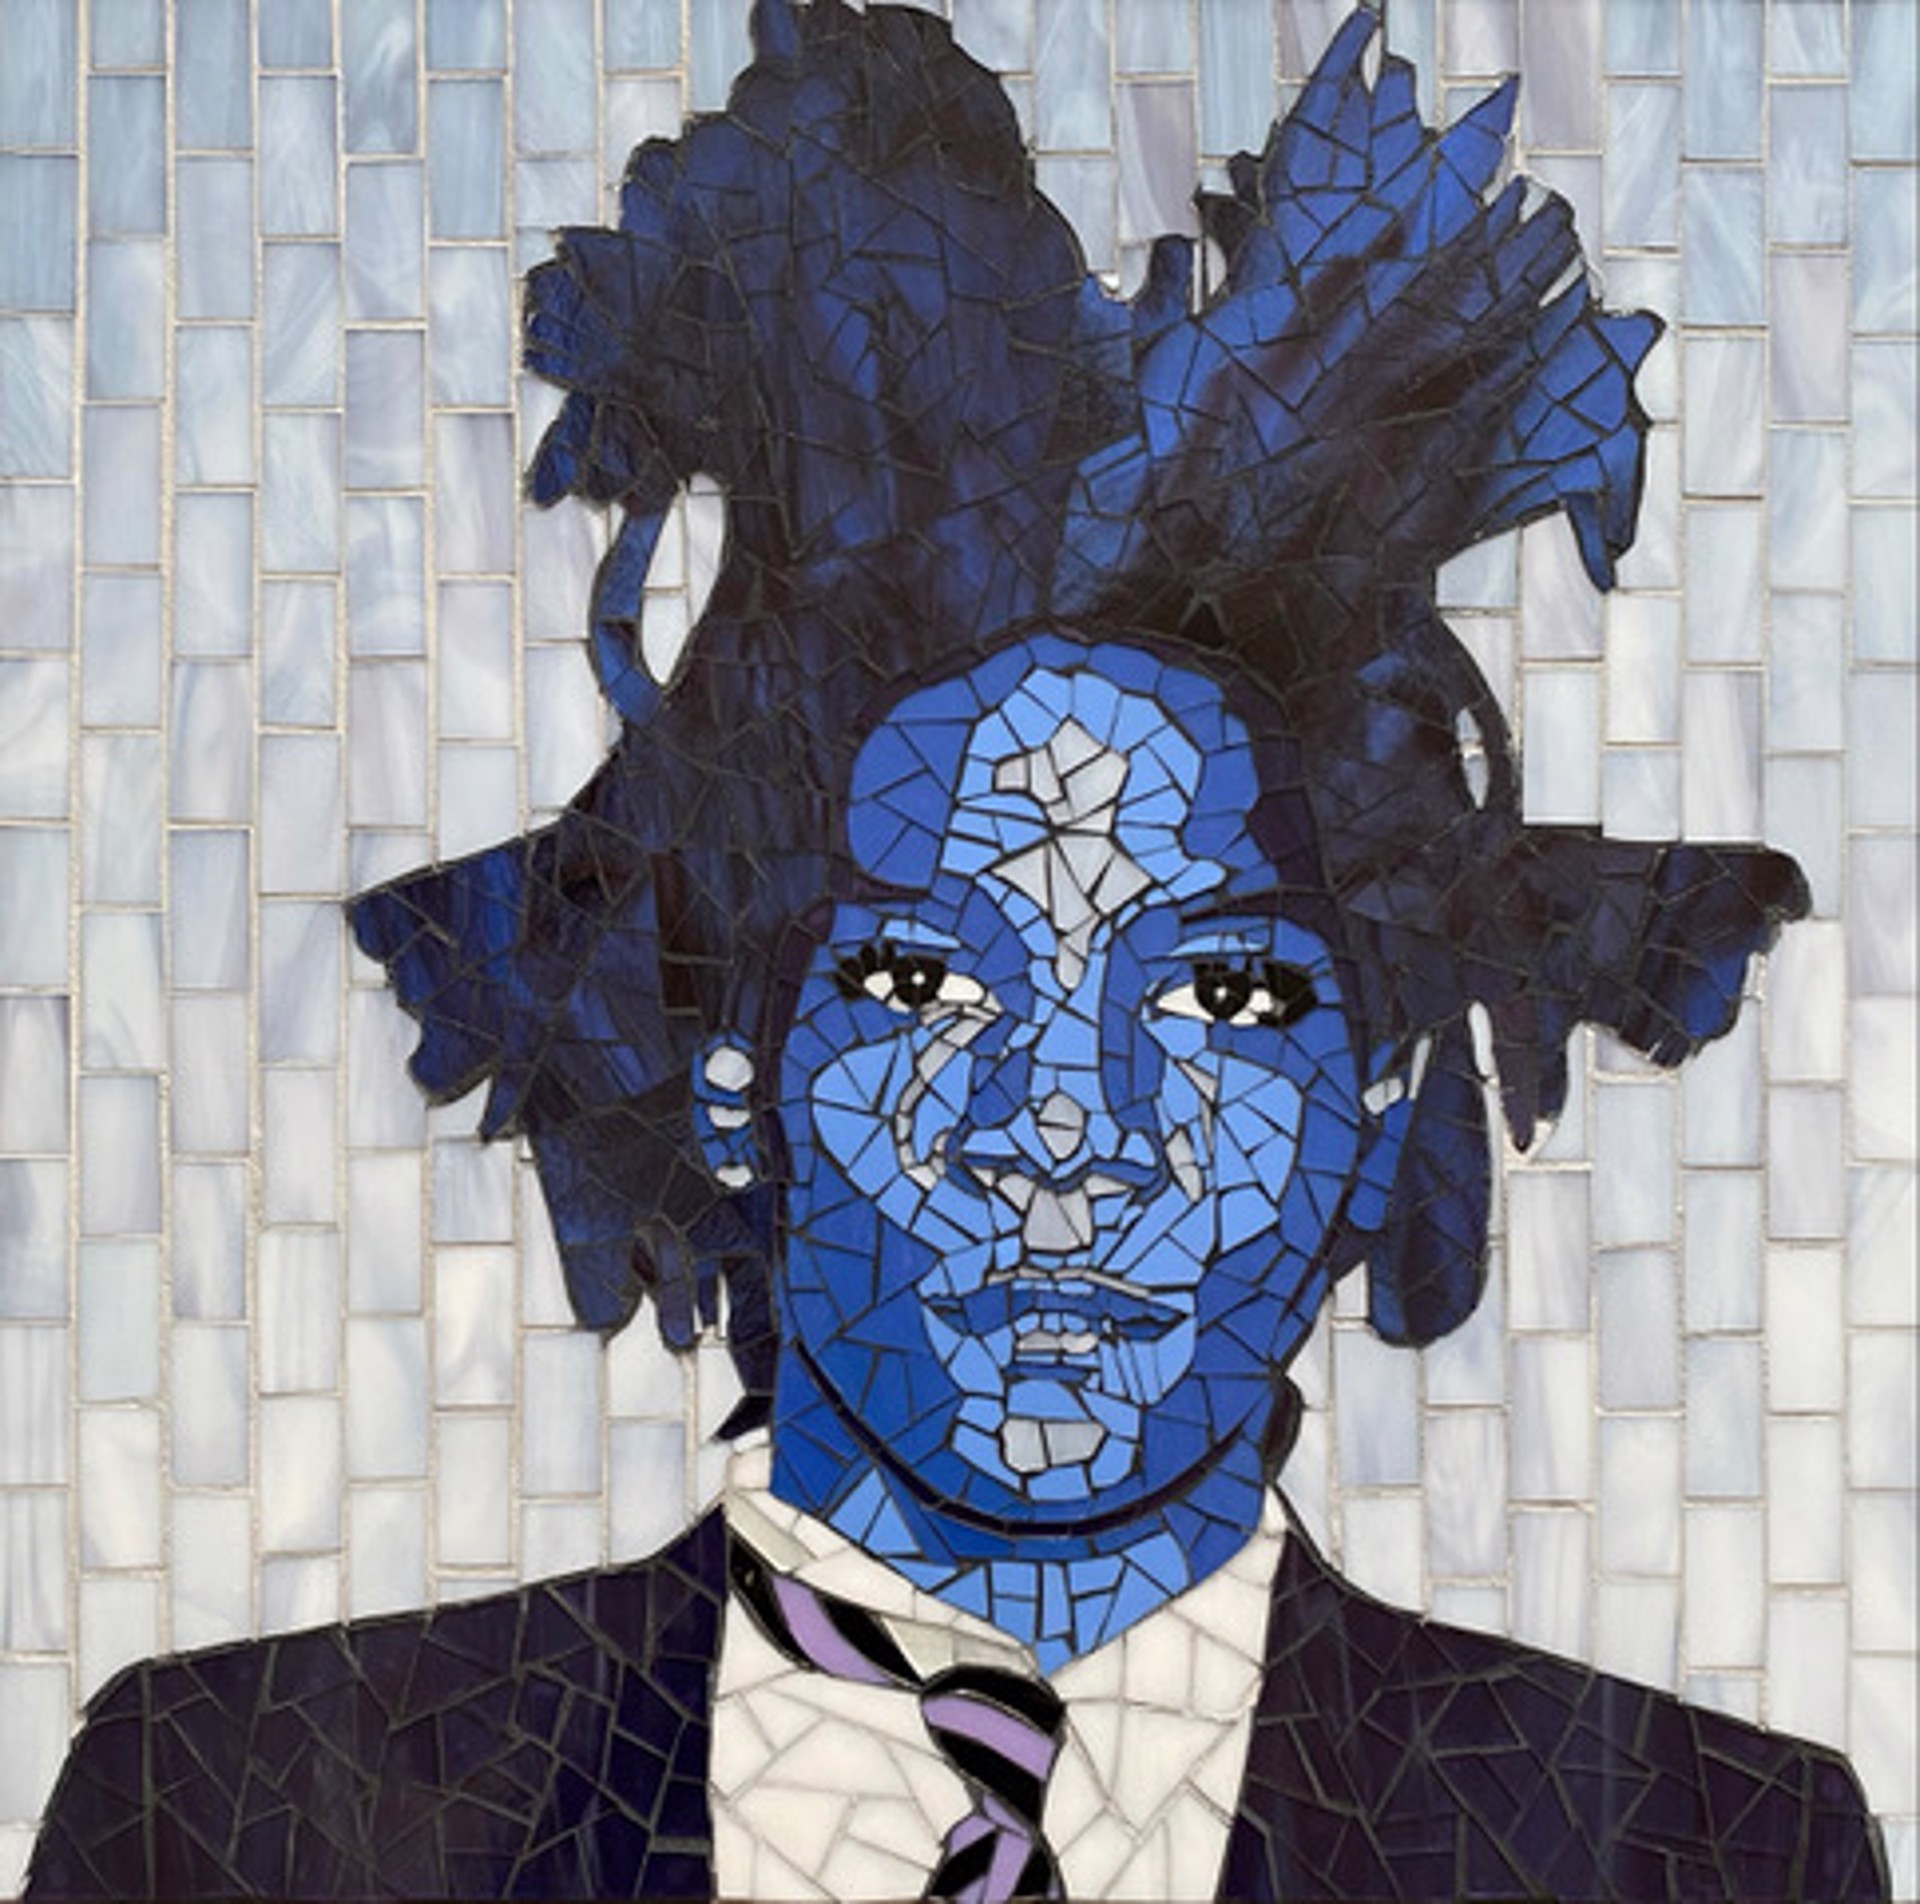 J-M Basquiat by Grace Baley